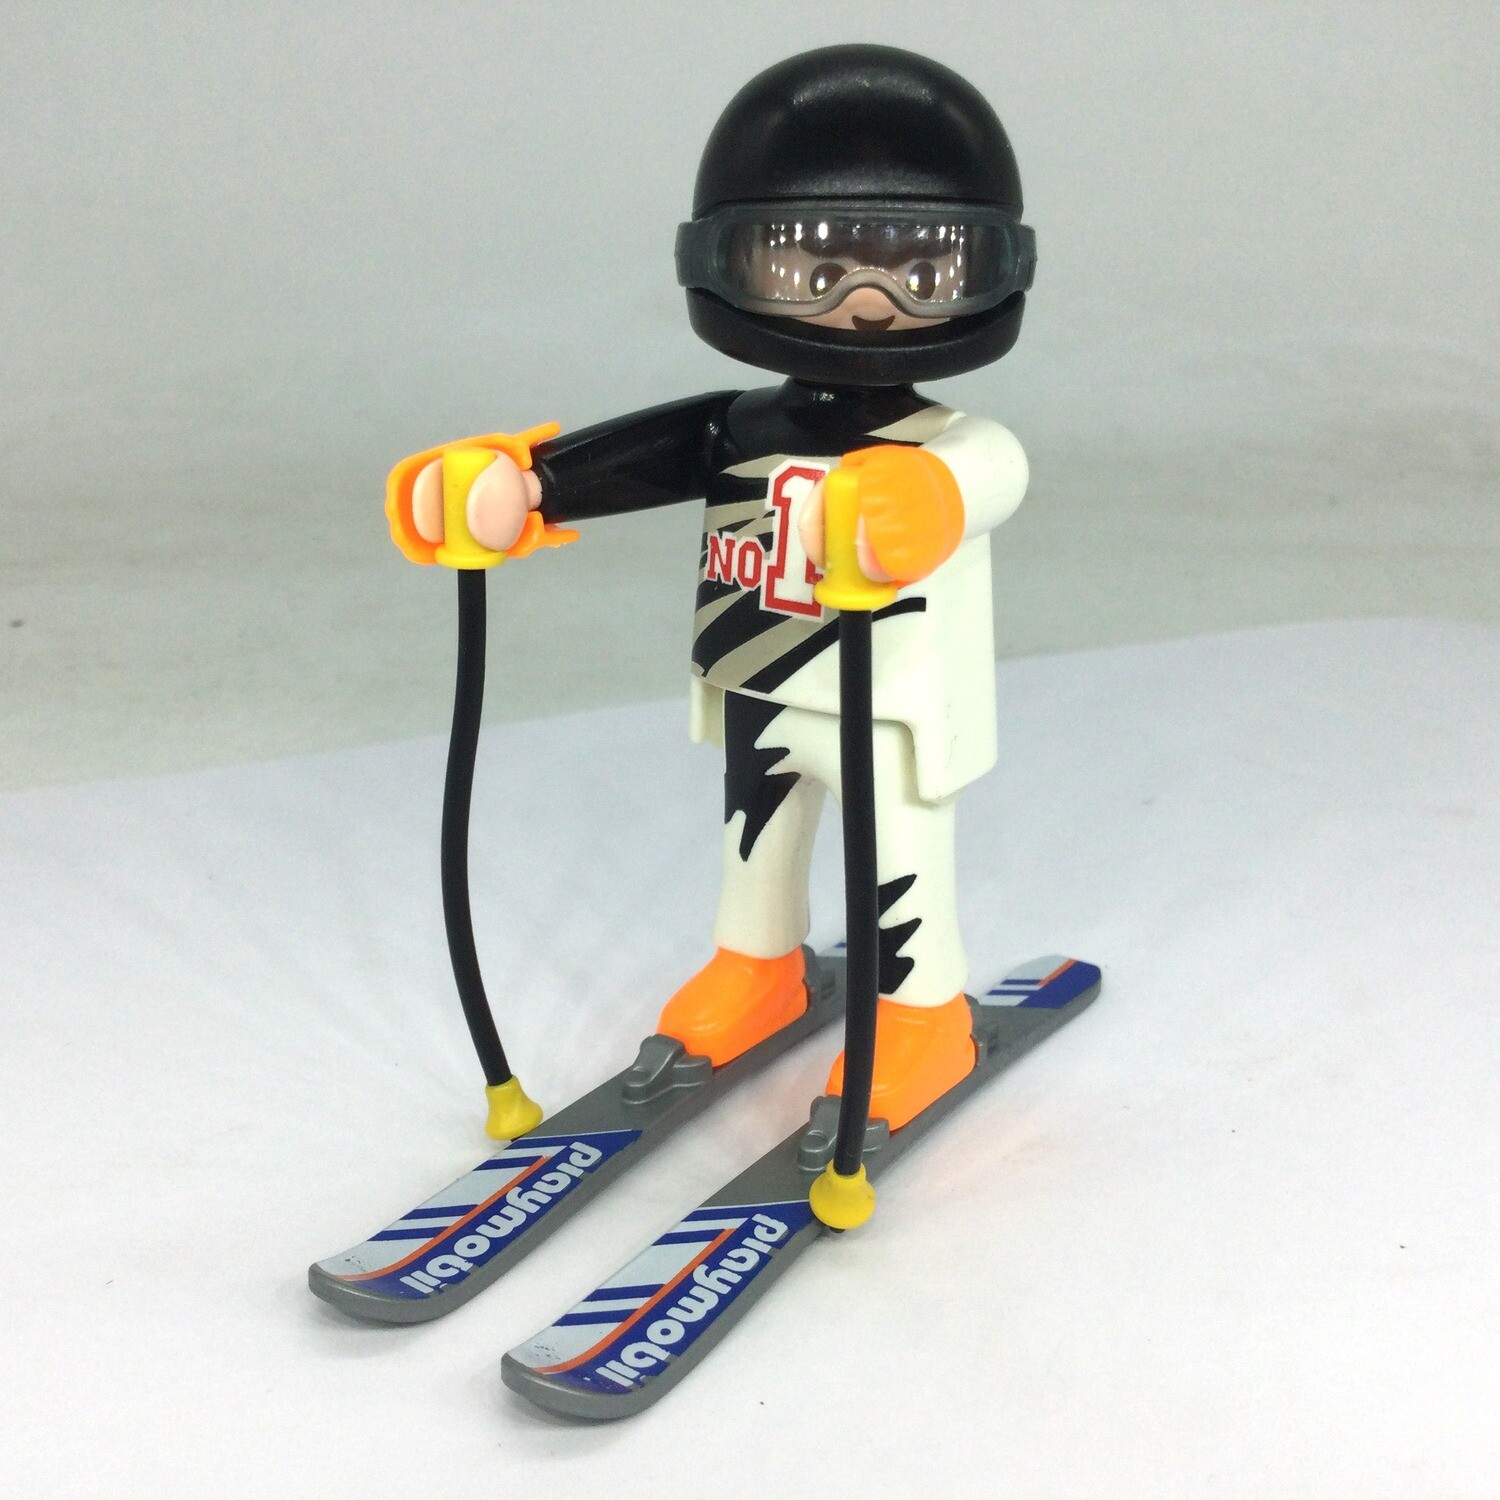 playmobil skieur olympique